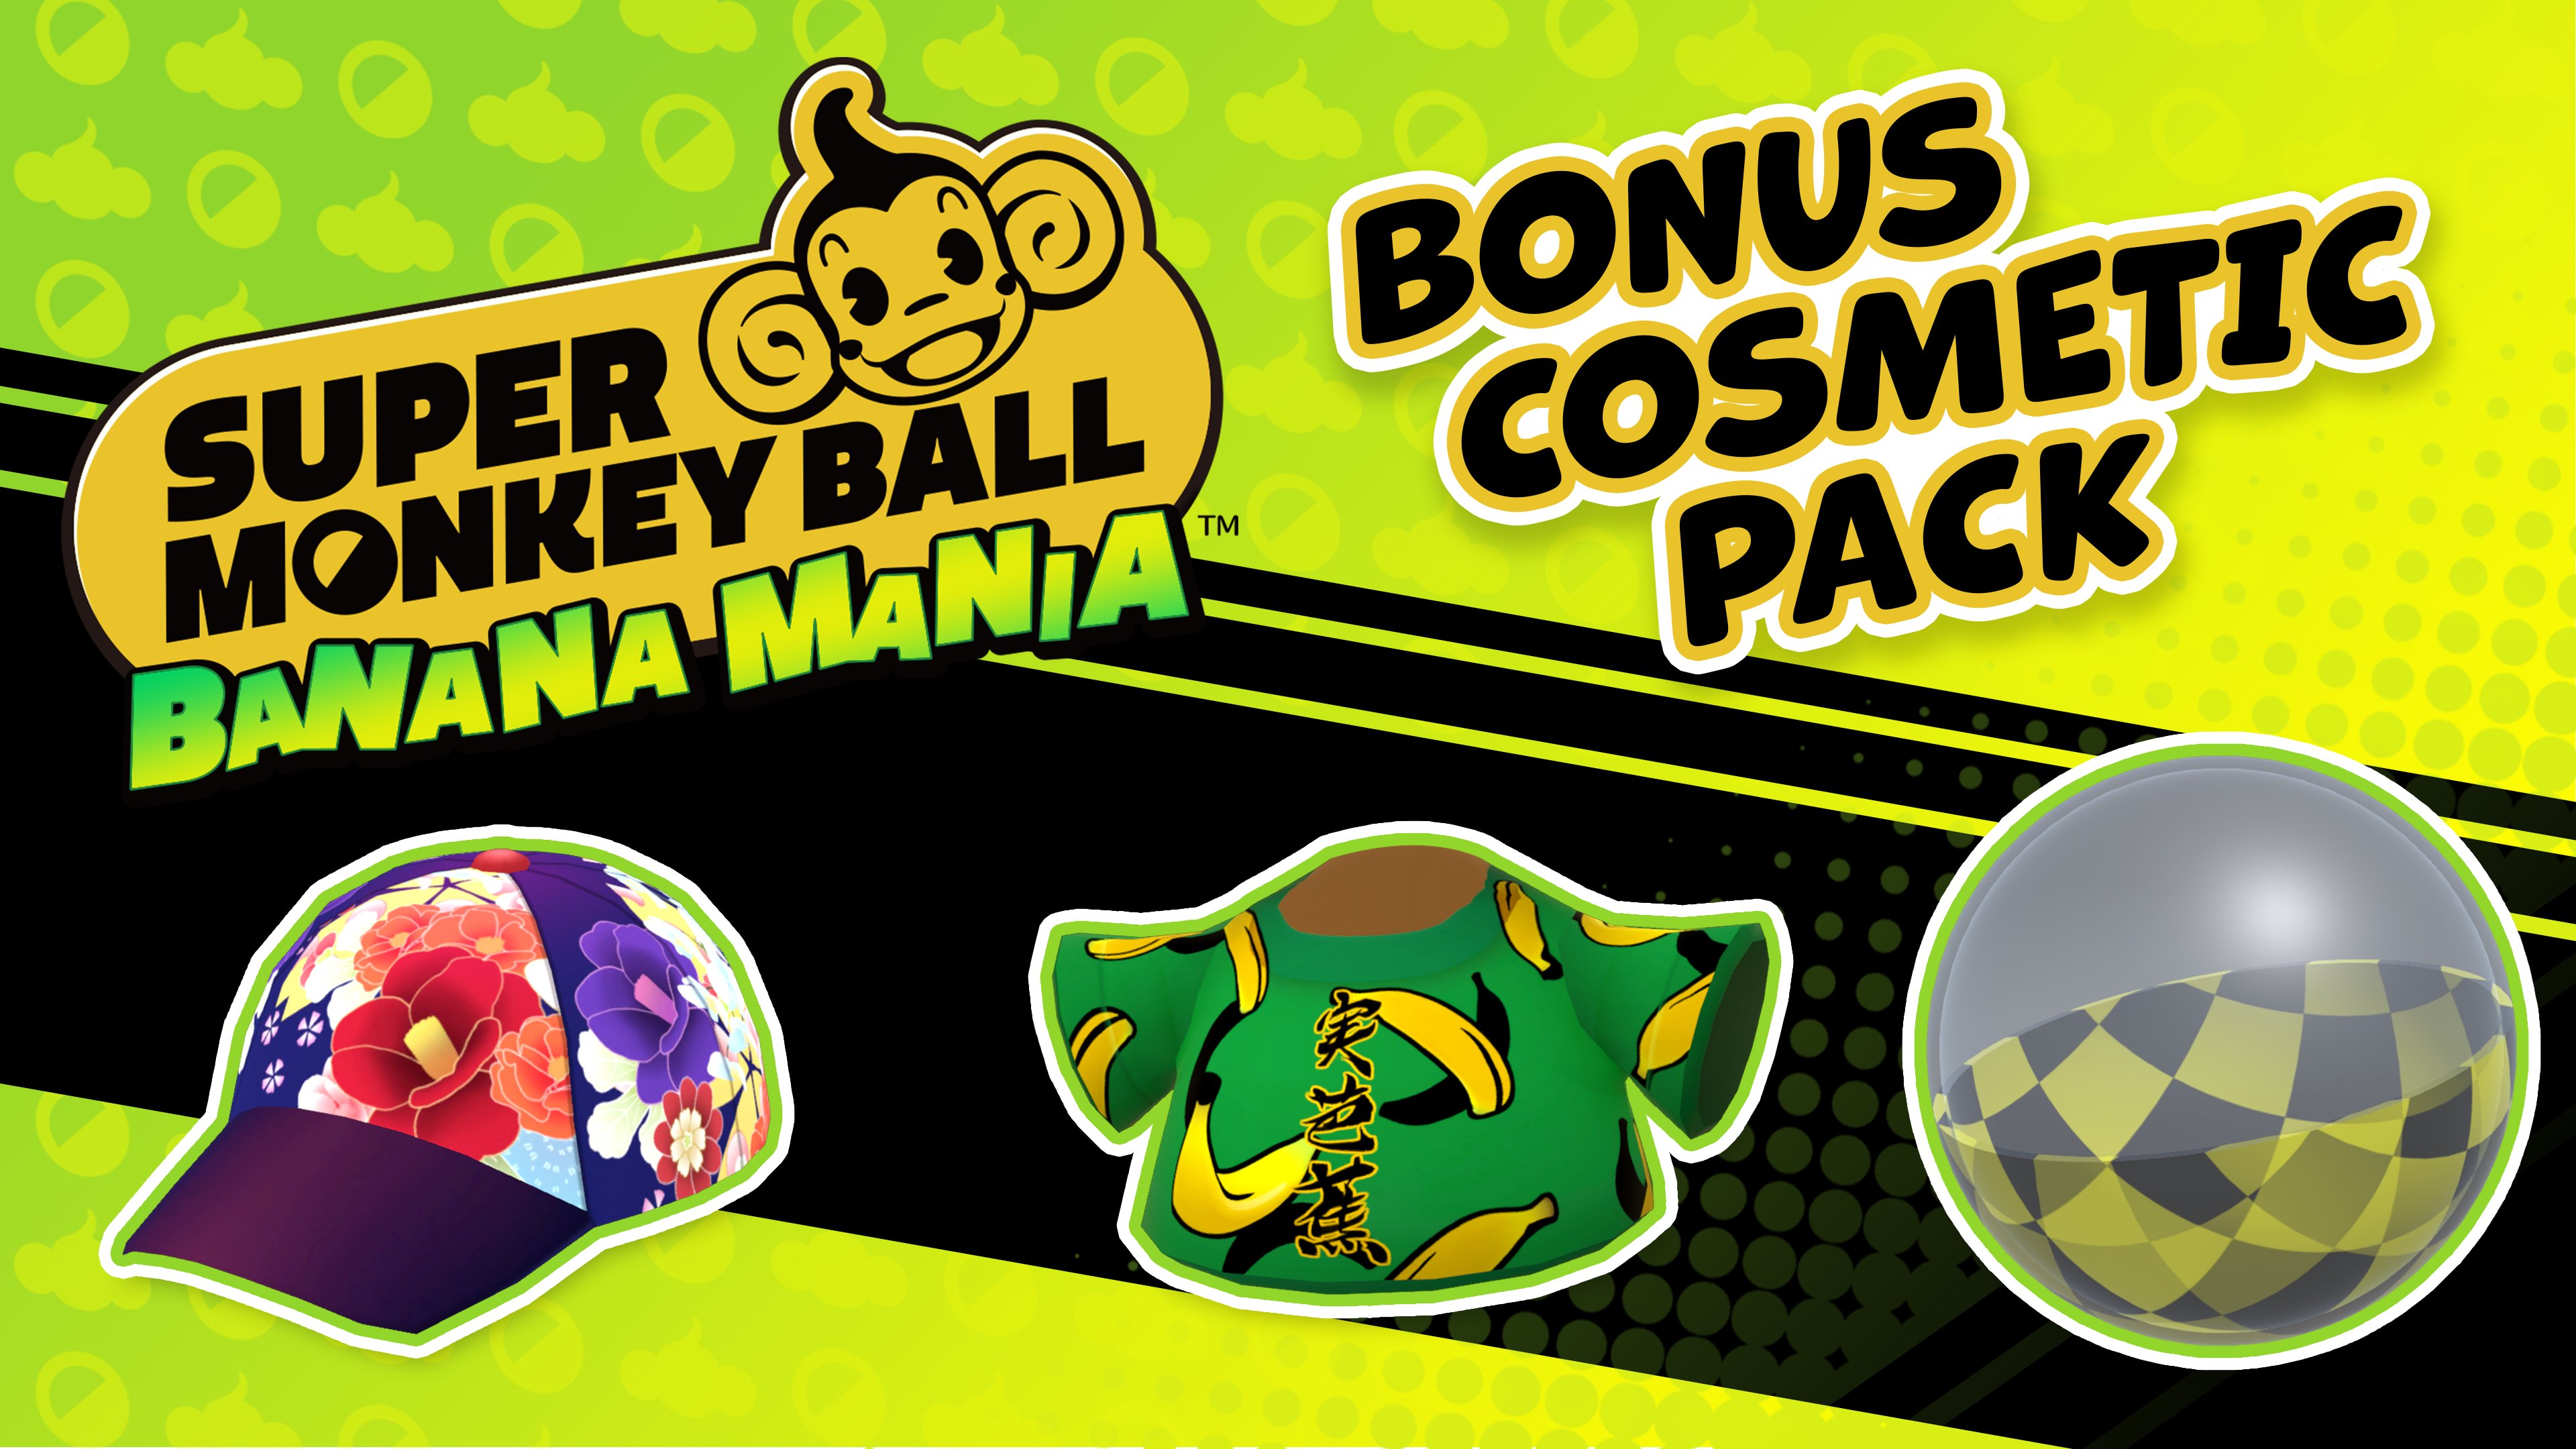 [$ 0.55] Super Monkey Ball: Banana Mania - Bonus Cosmetic Pack DLC EU PS5 CD Key